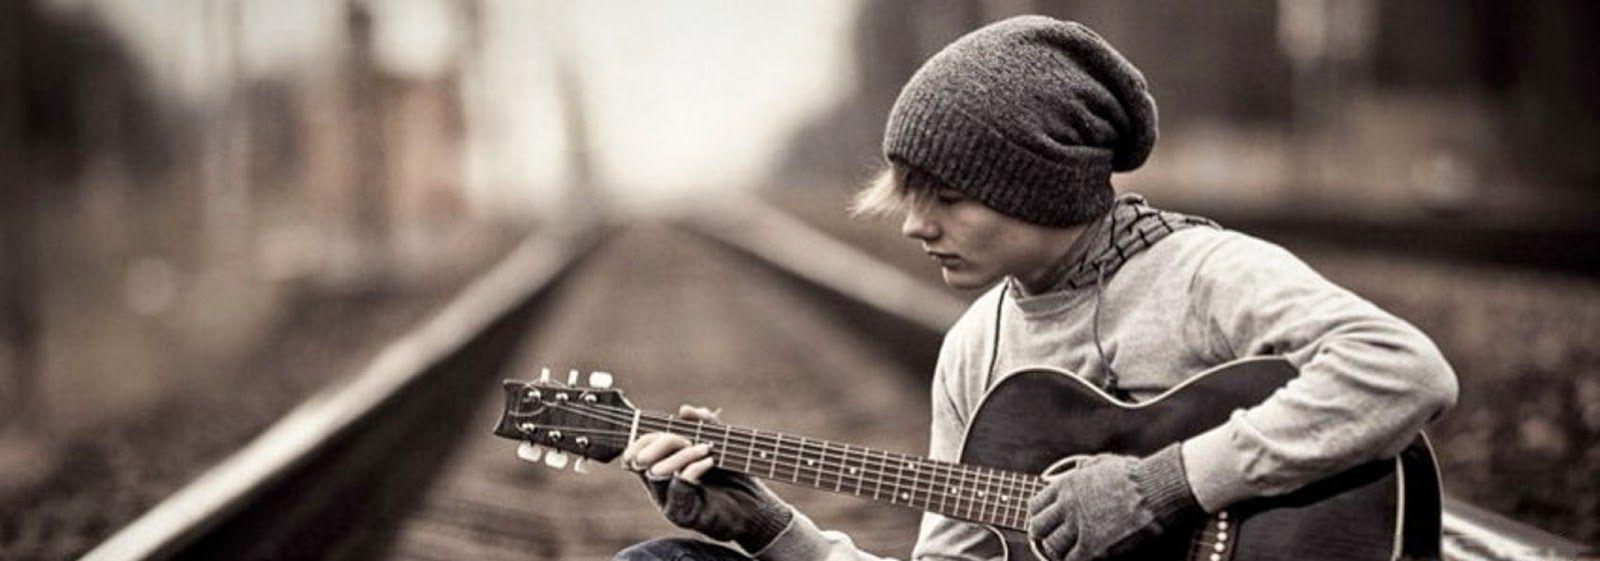 Boy With Guitar Facebook Cover.